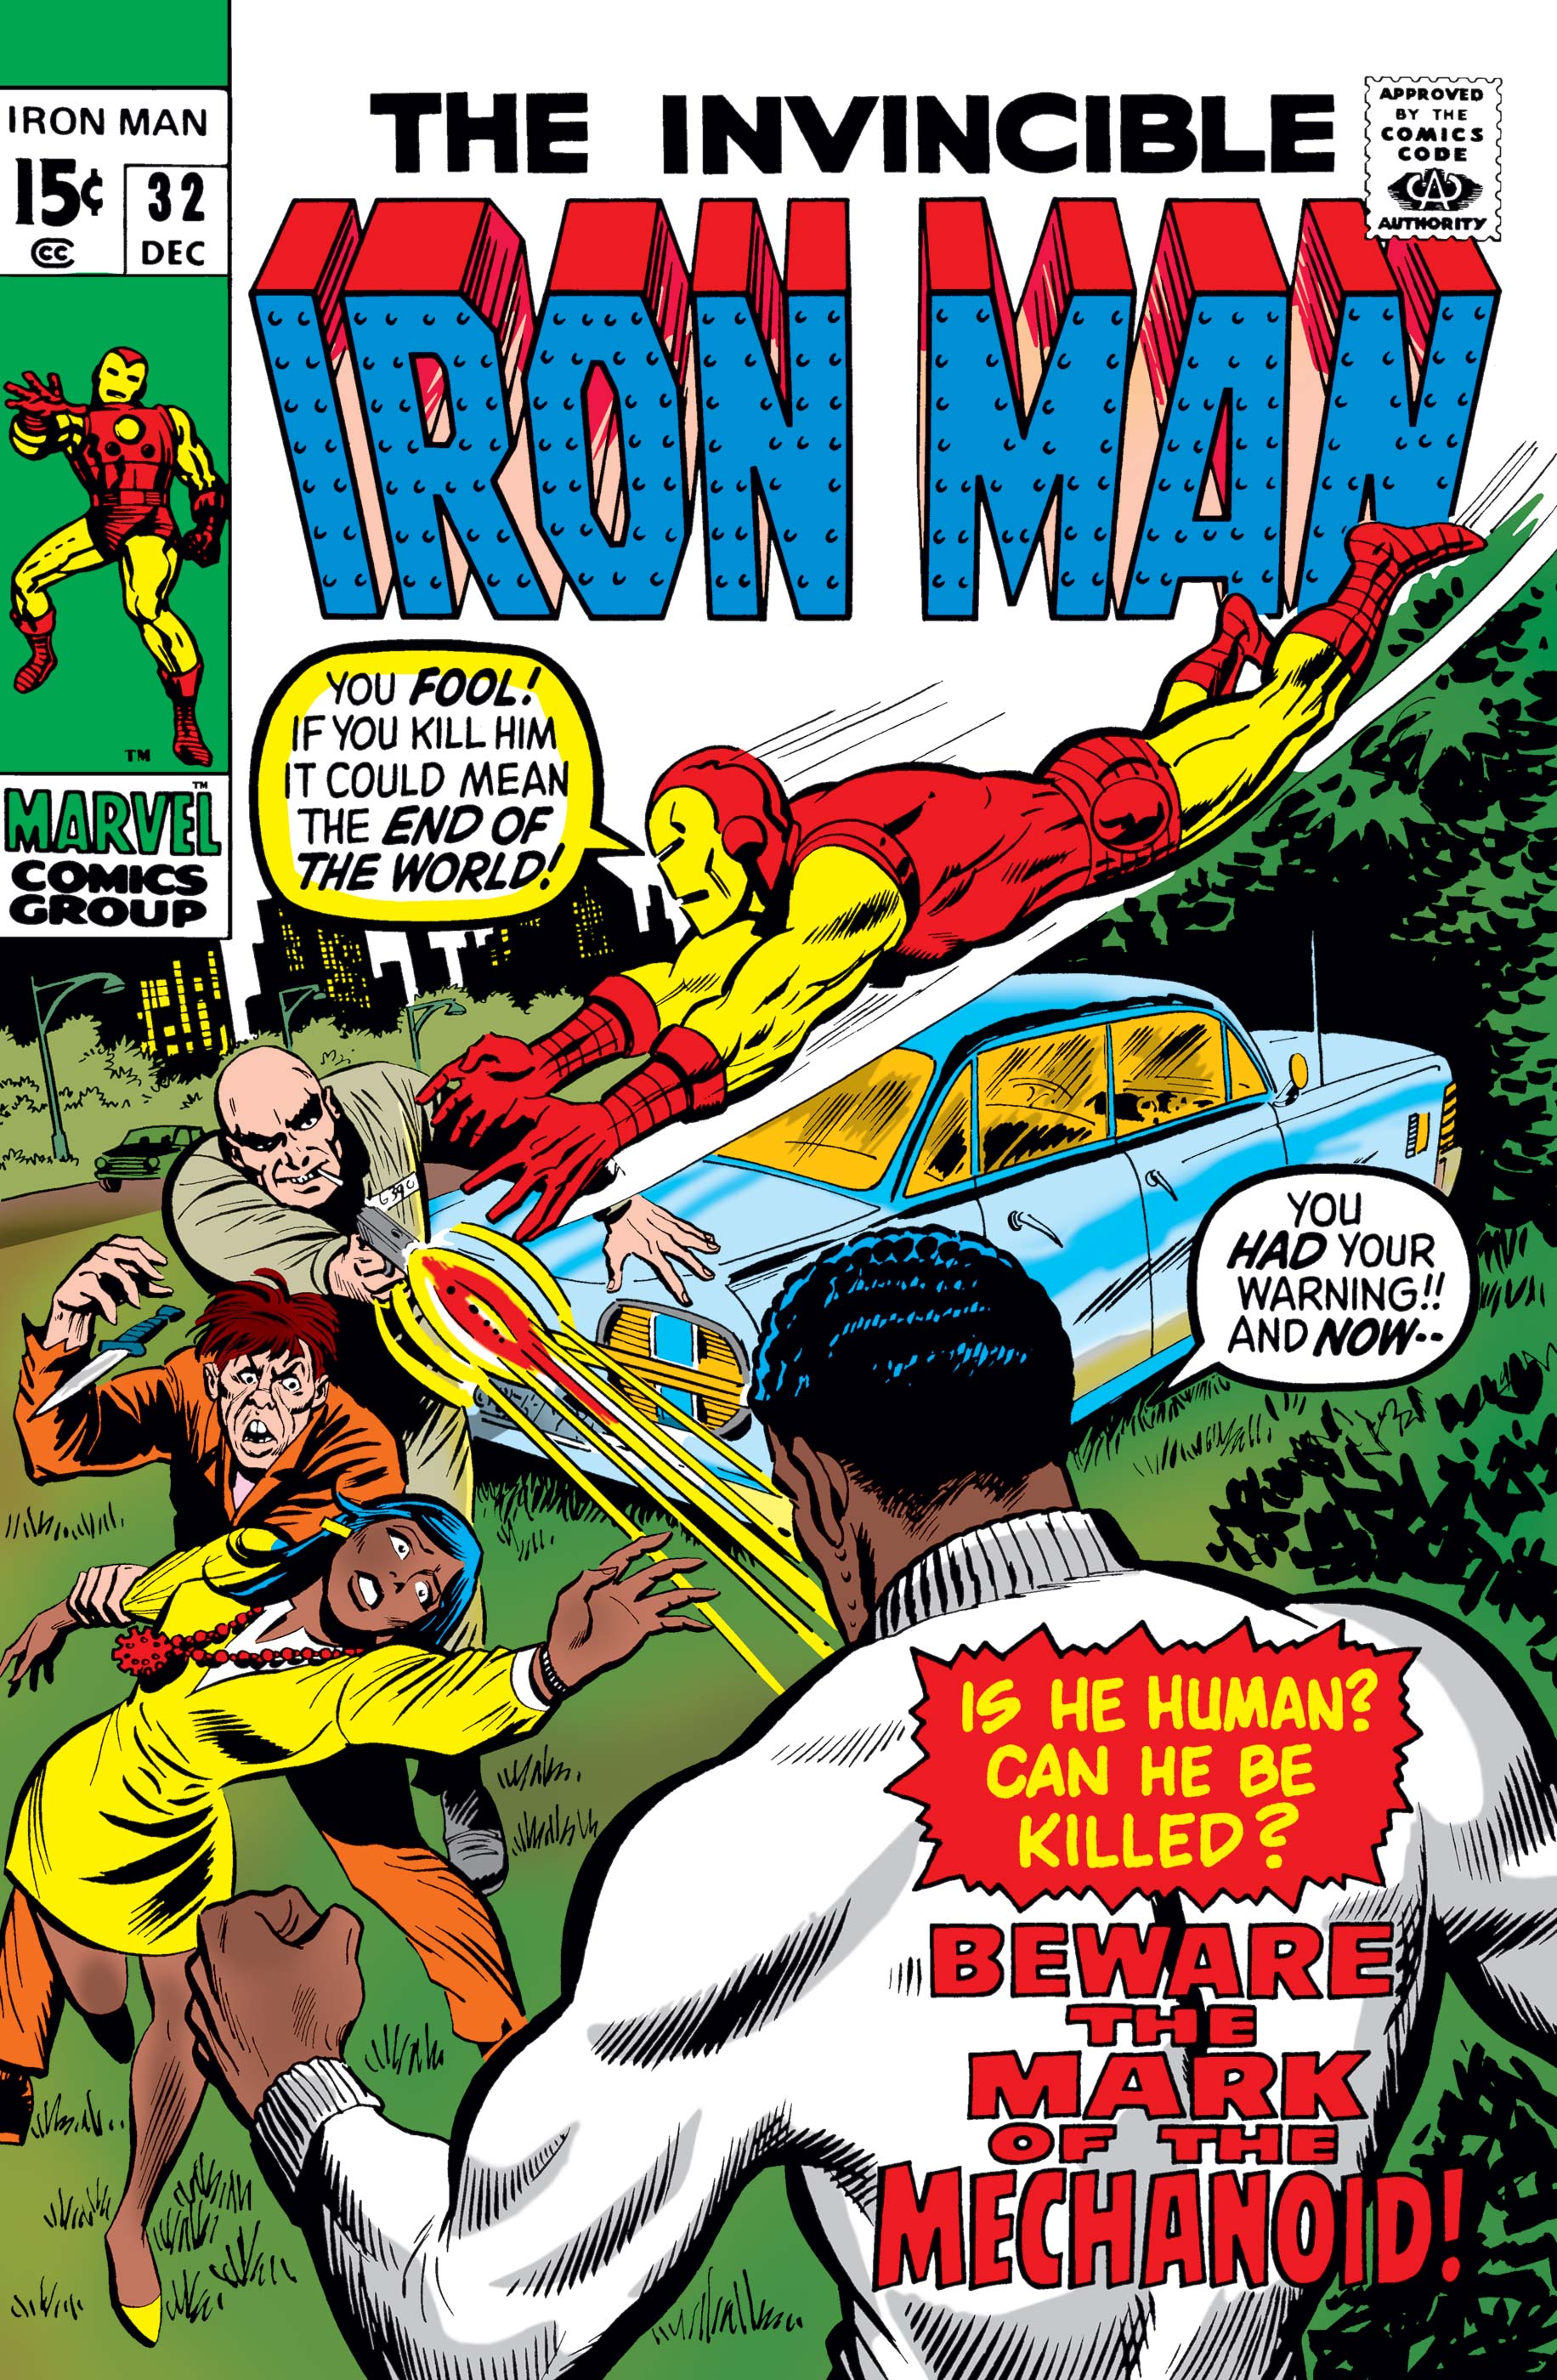 Iron Man (1968) #32